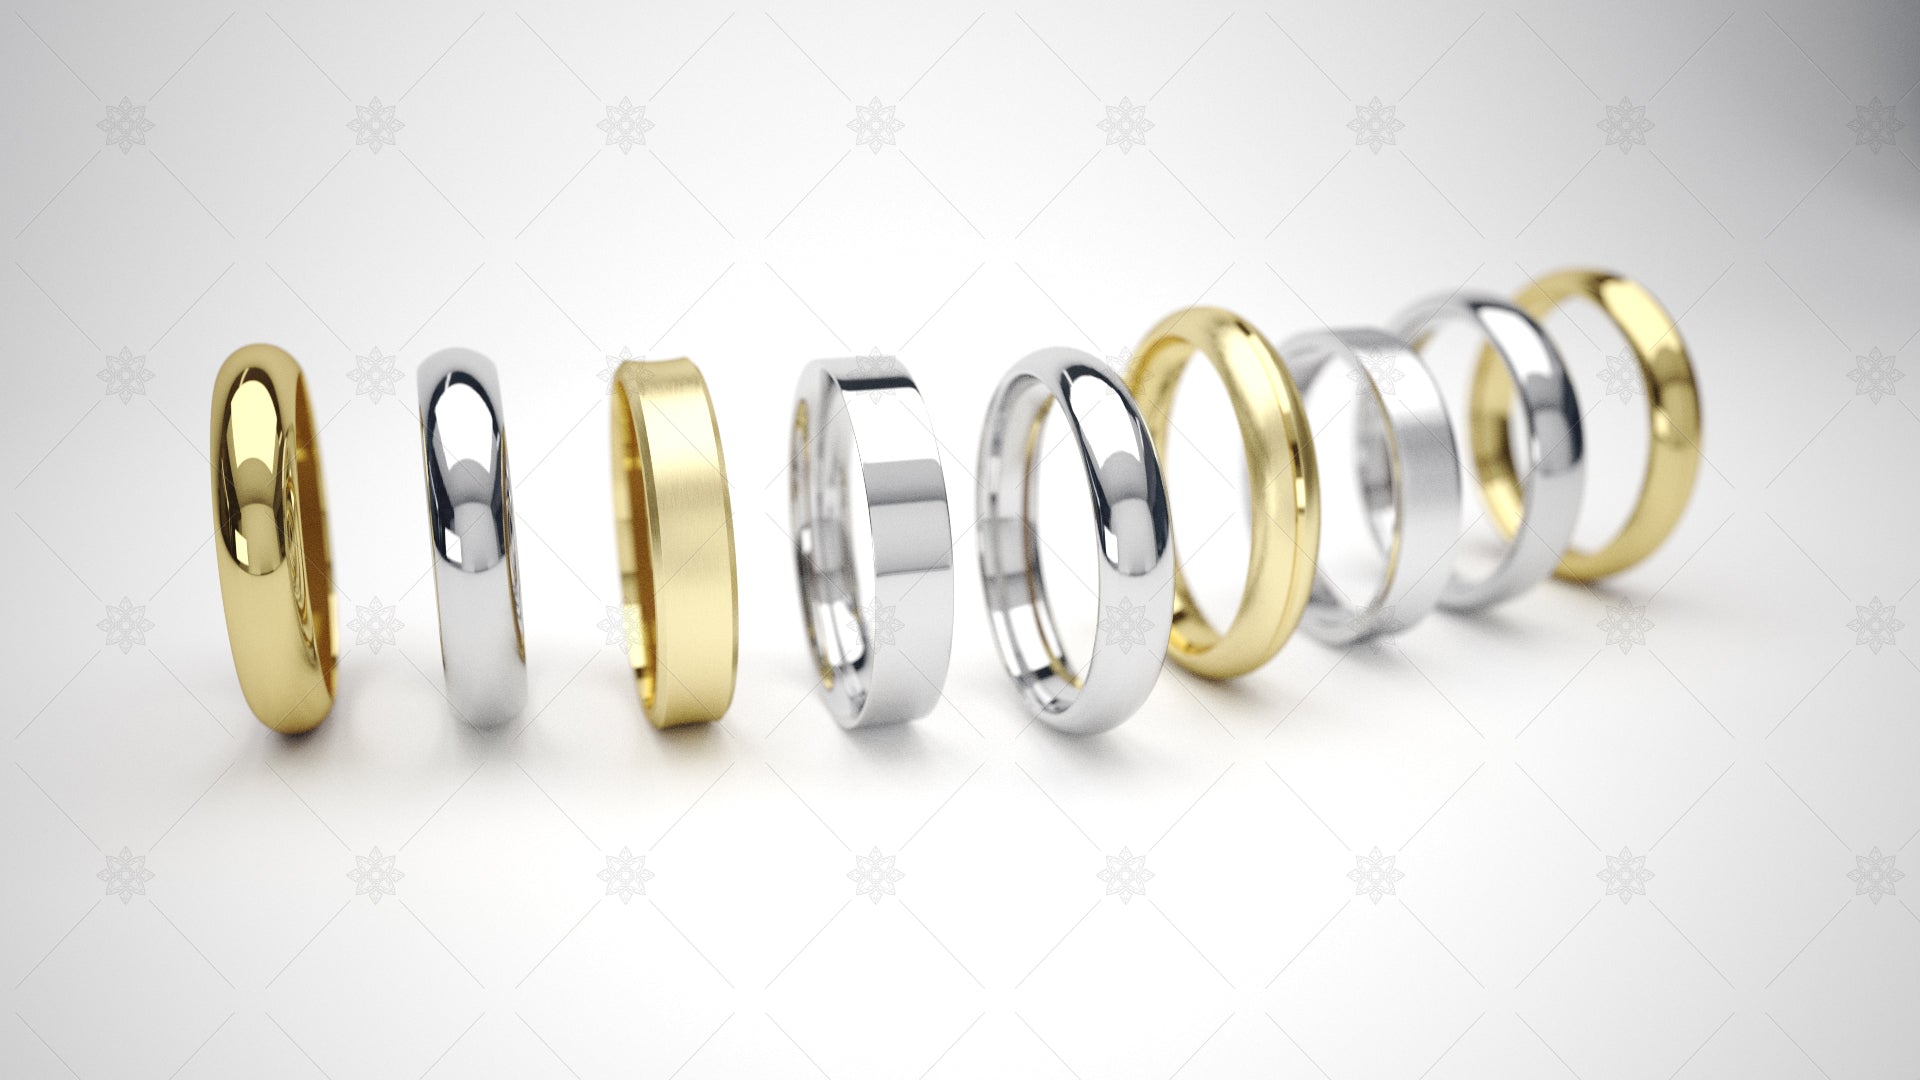 jewellery website banner wedding rings